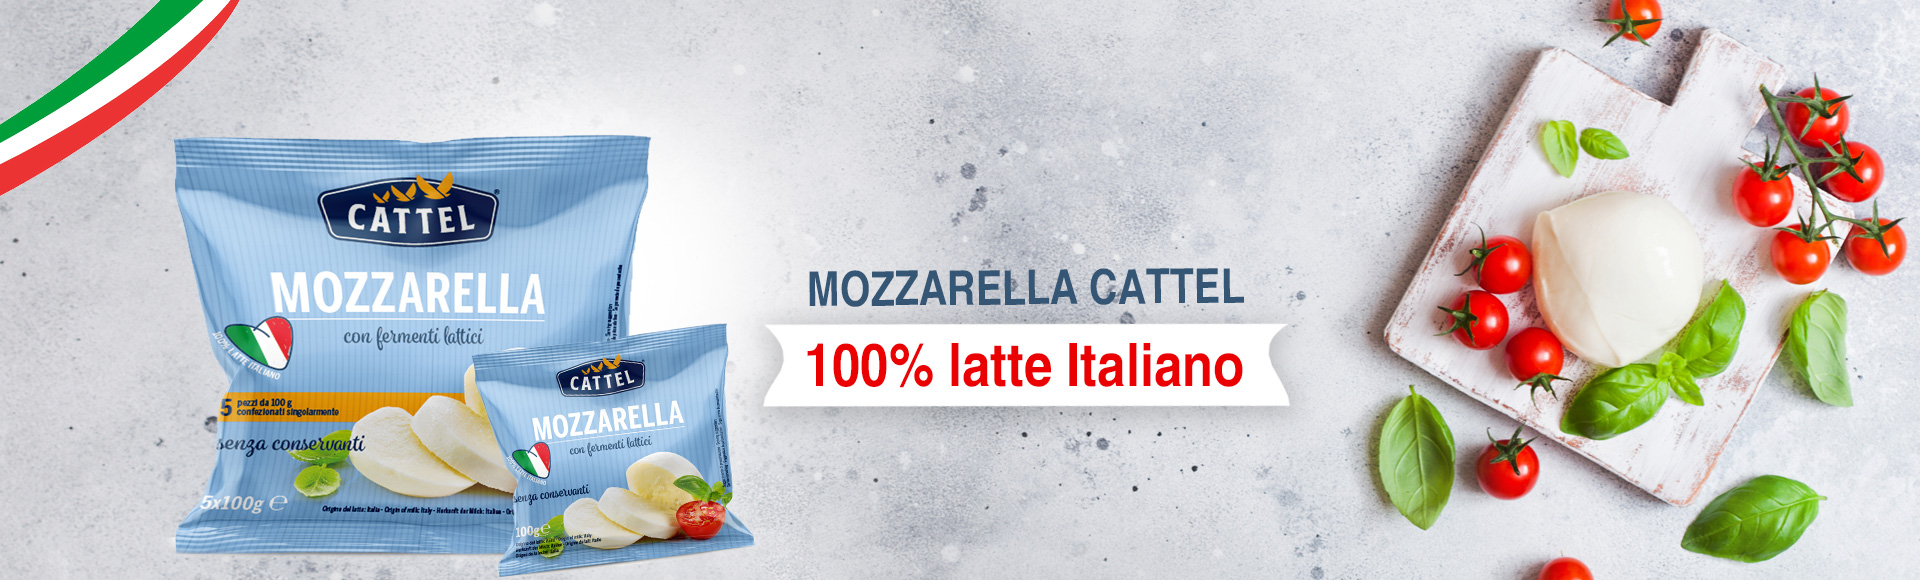 Mozzarella Cattel 